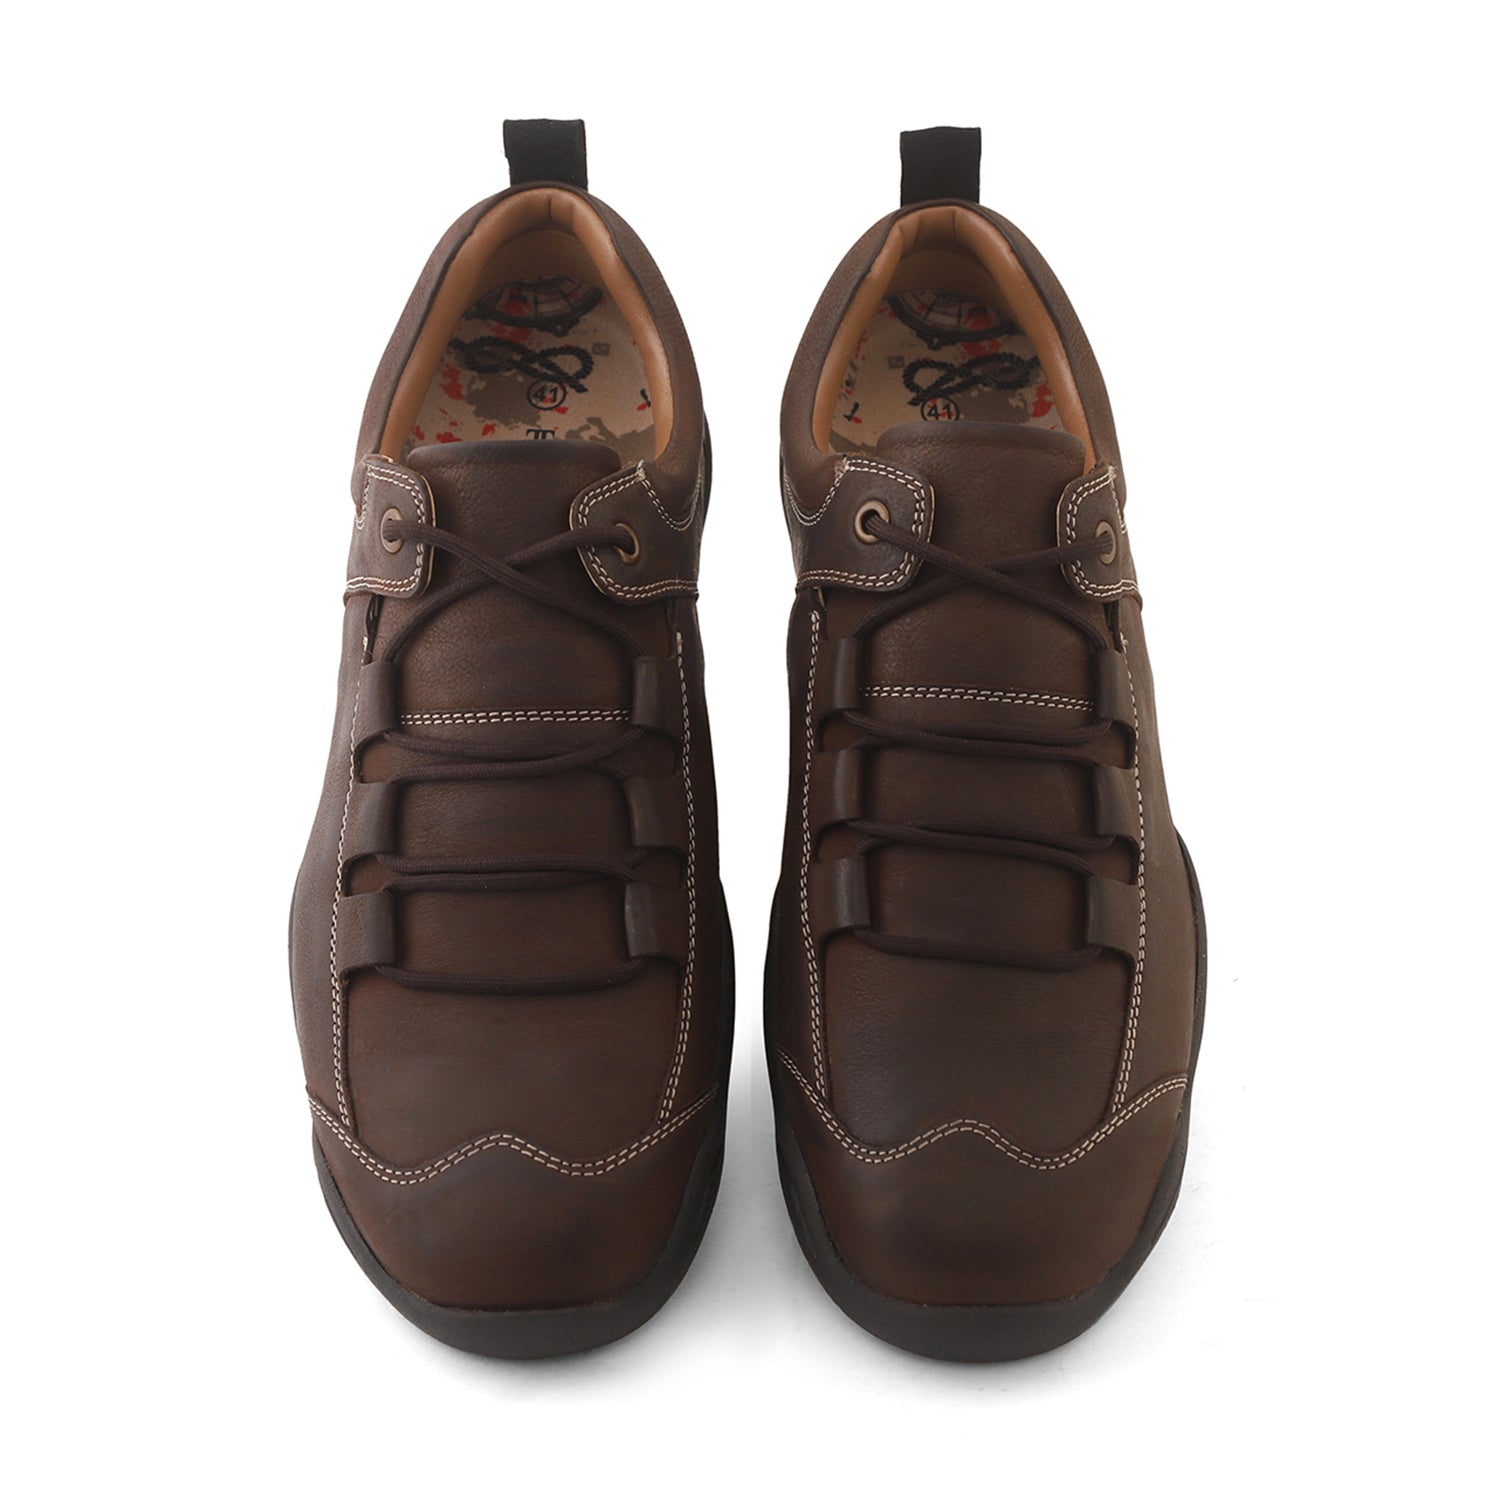 Ezok Mens Casual Brown Leather Sneakers